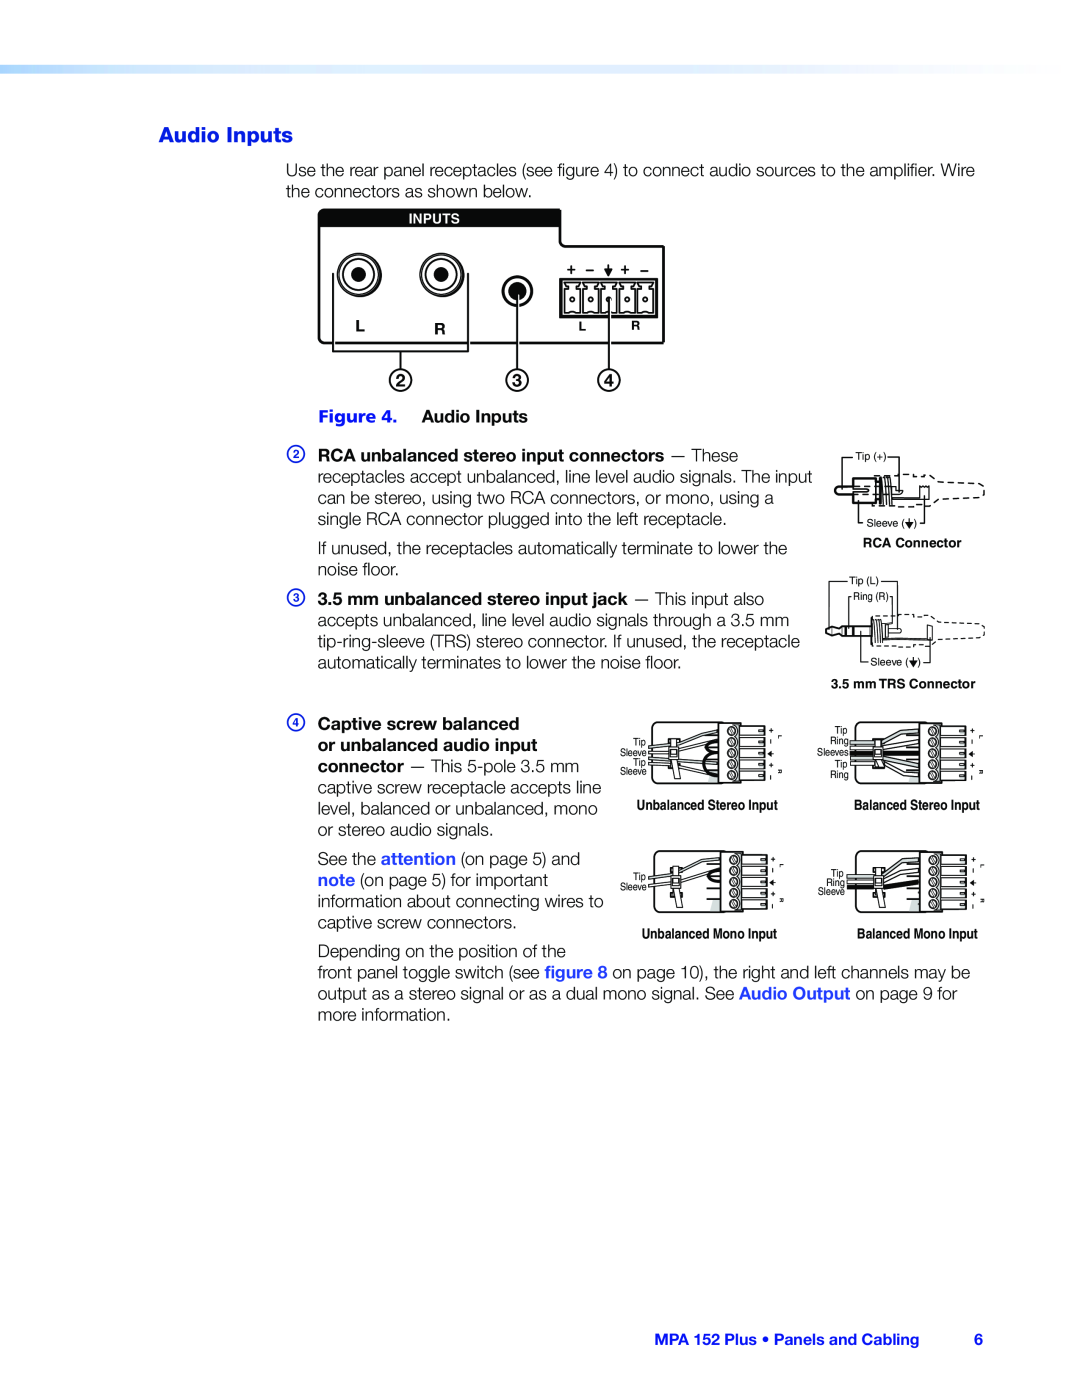 Extron electronic MPA 152 PLUS manual Audio Inputs 